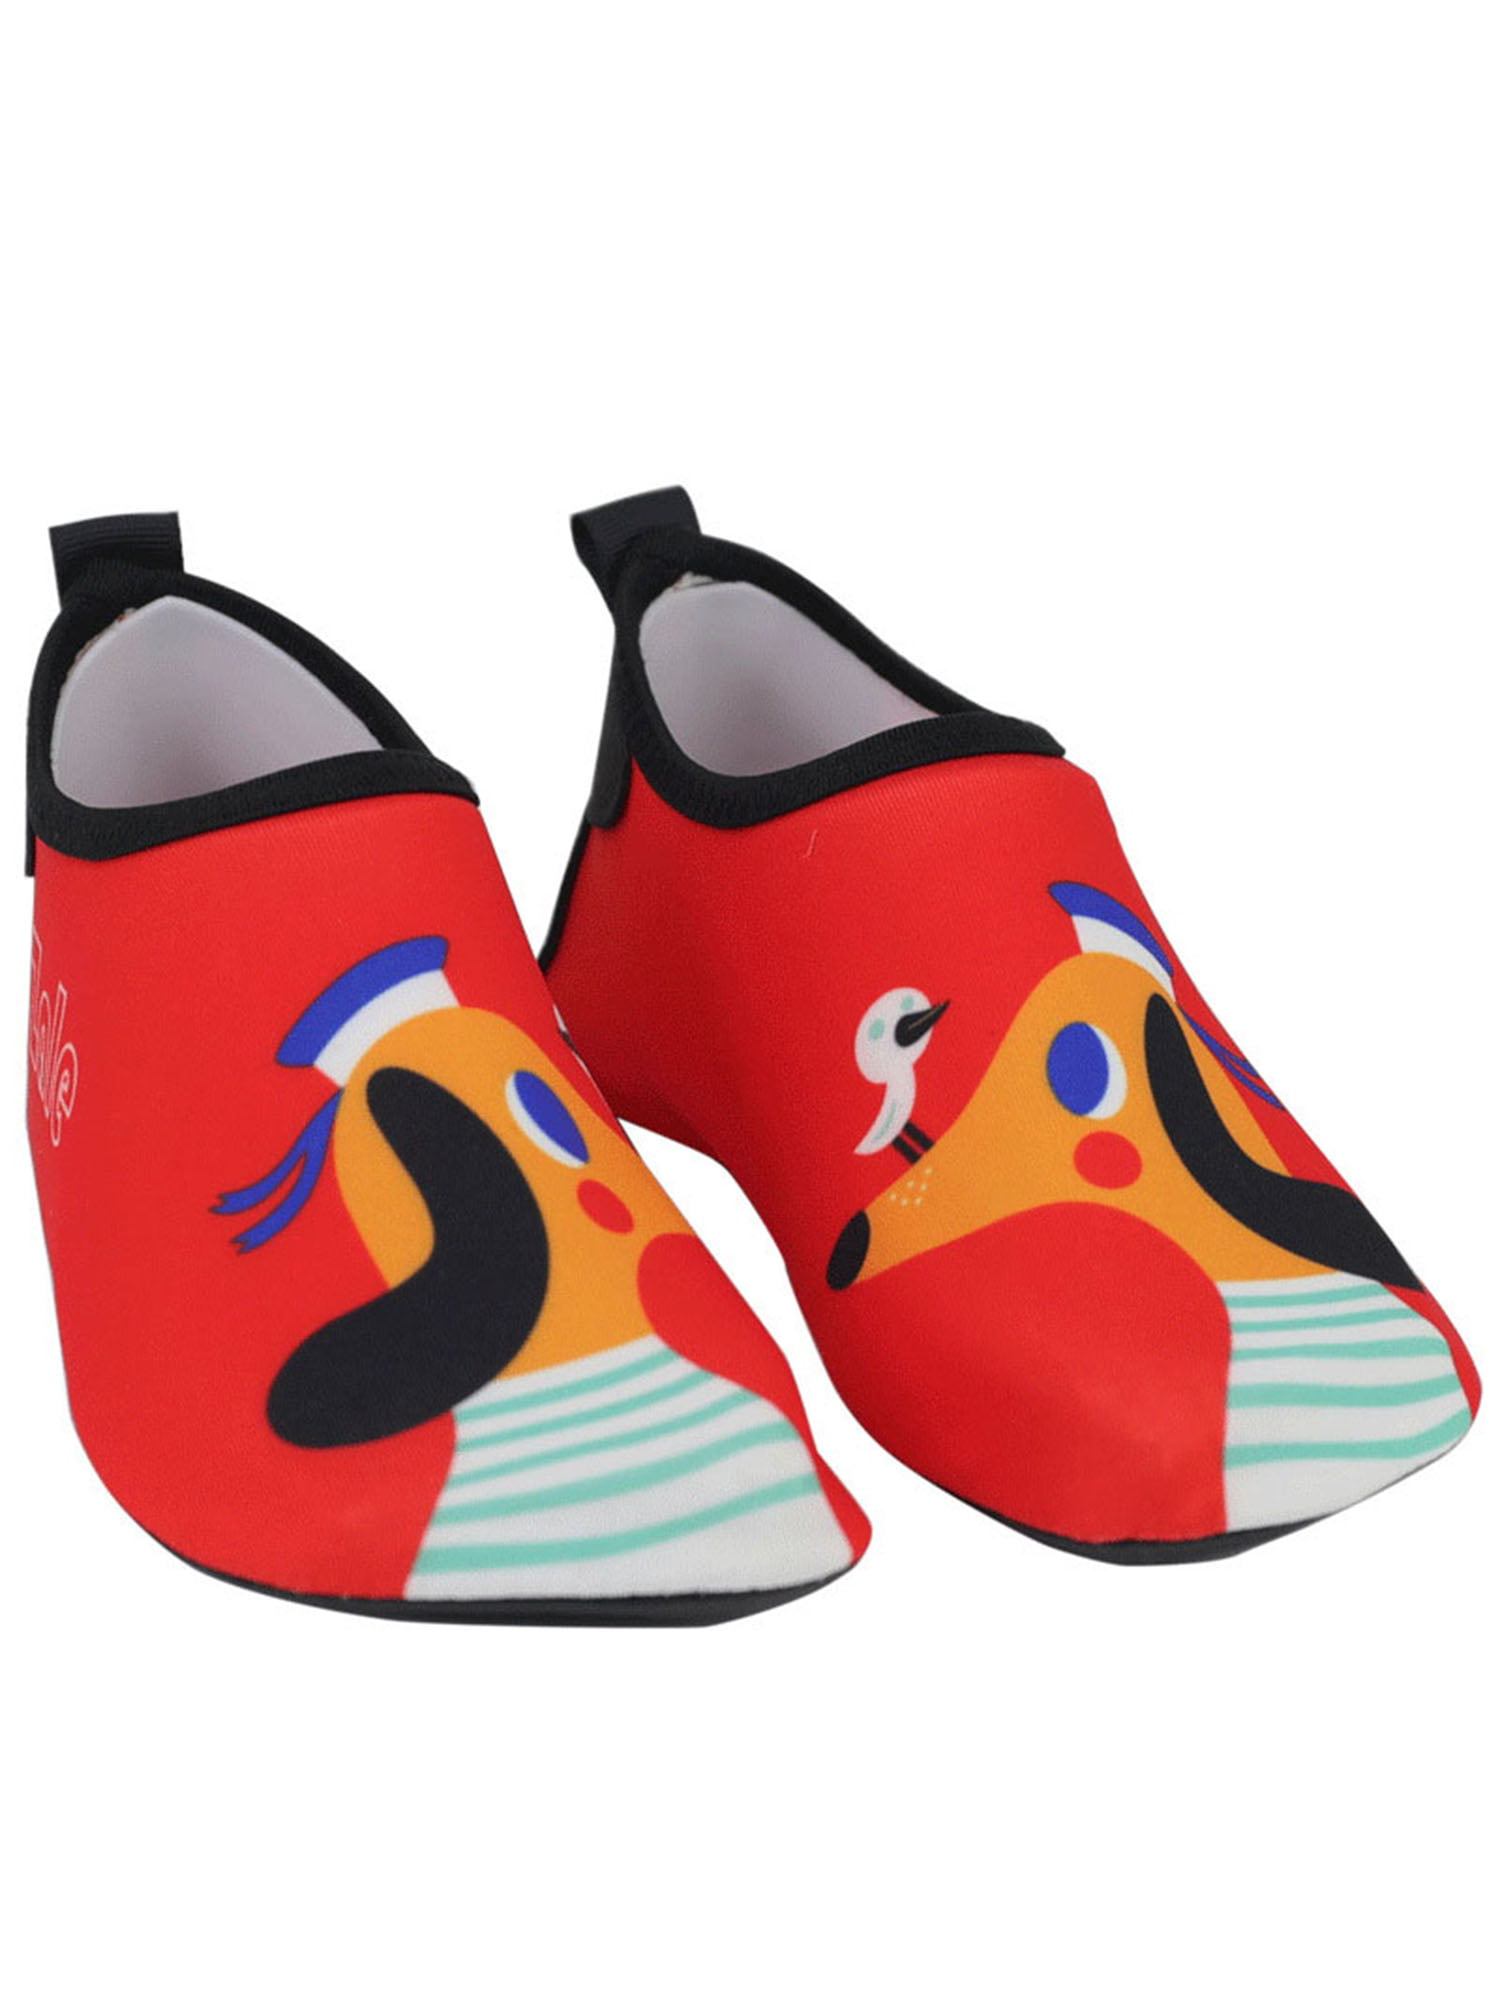 Unisex Aqua Shoes Mens Womens Kids Water Socks Slip On Sea Wet Beach Swim Surf 6 